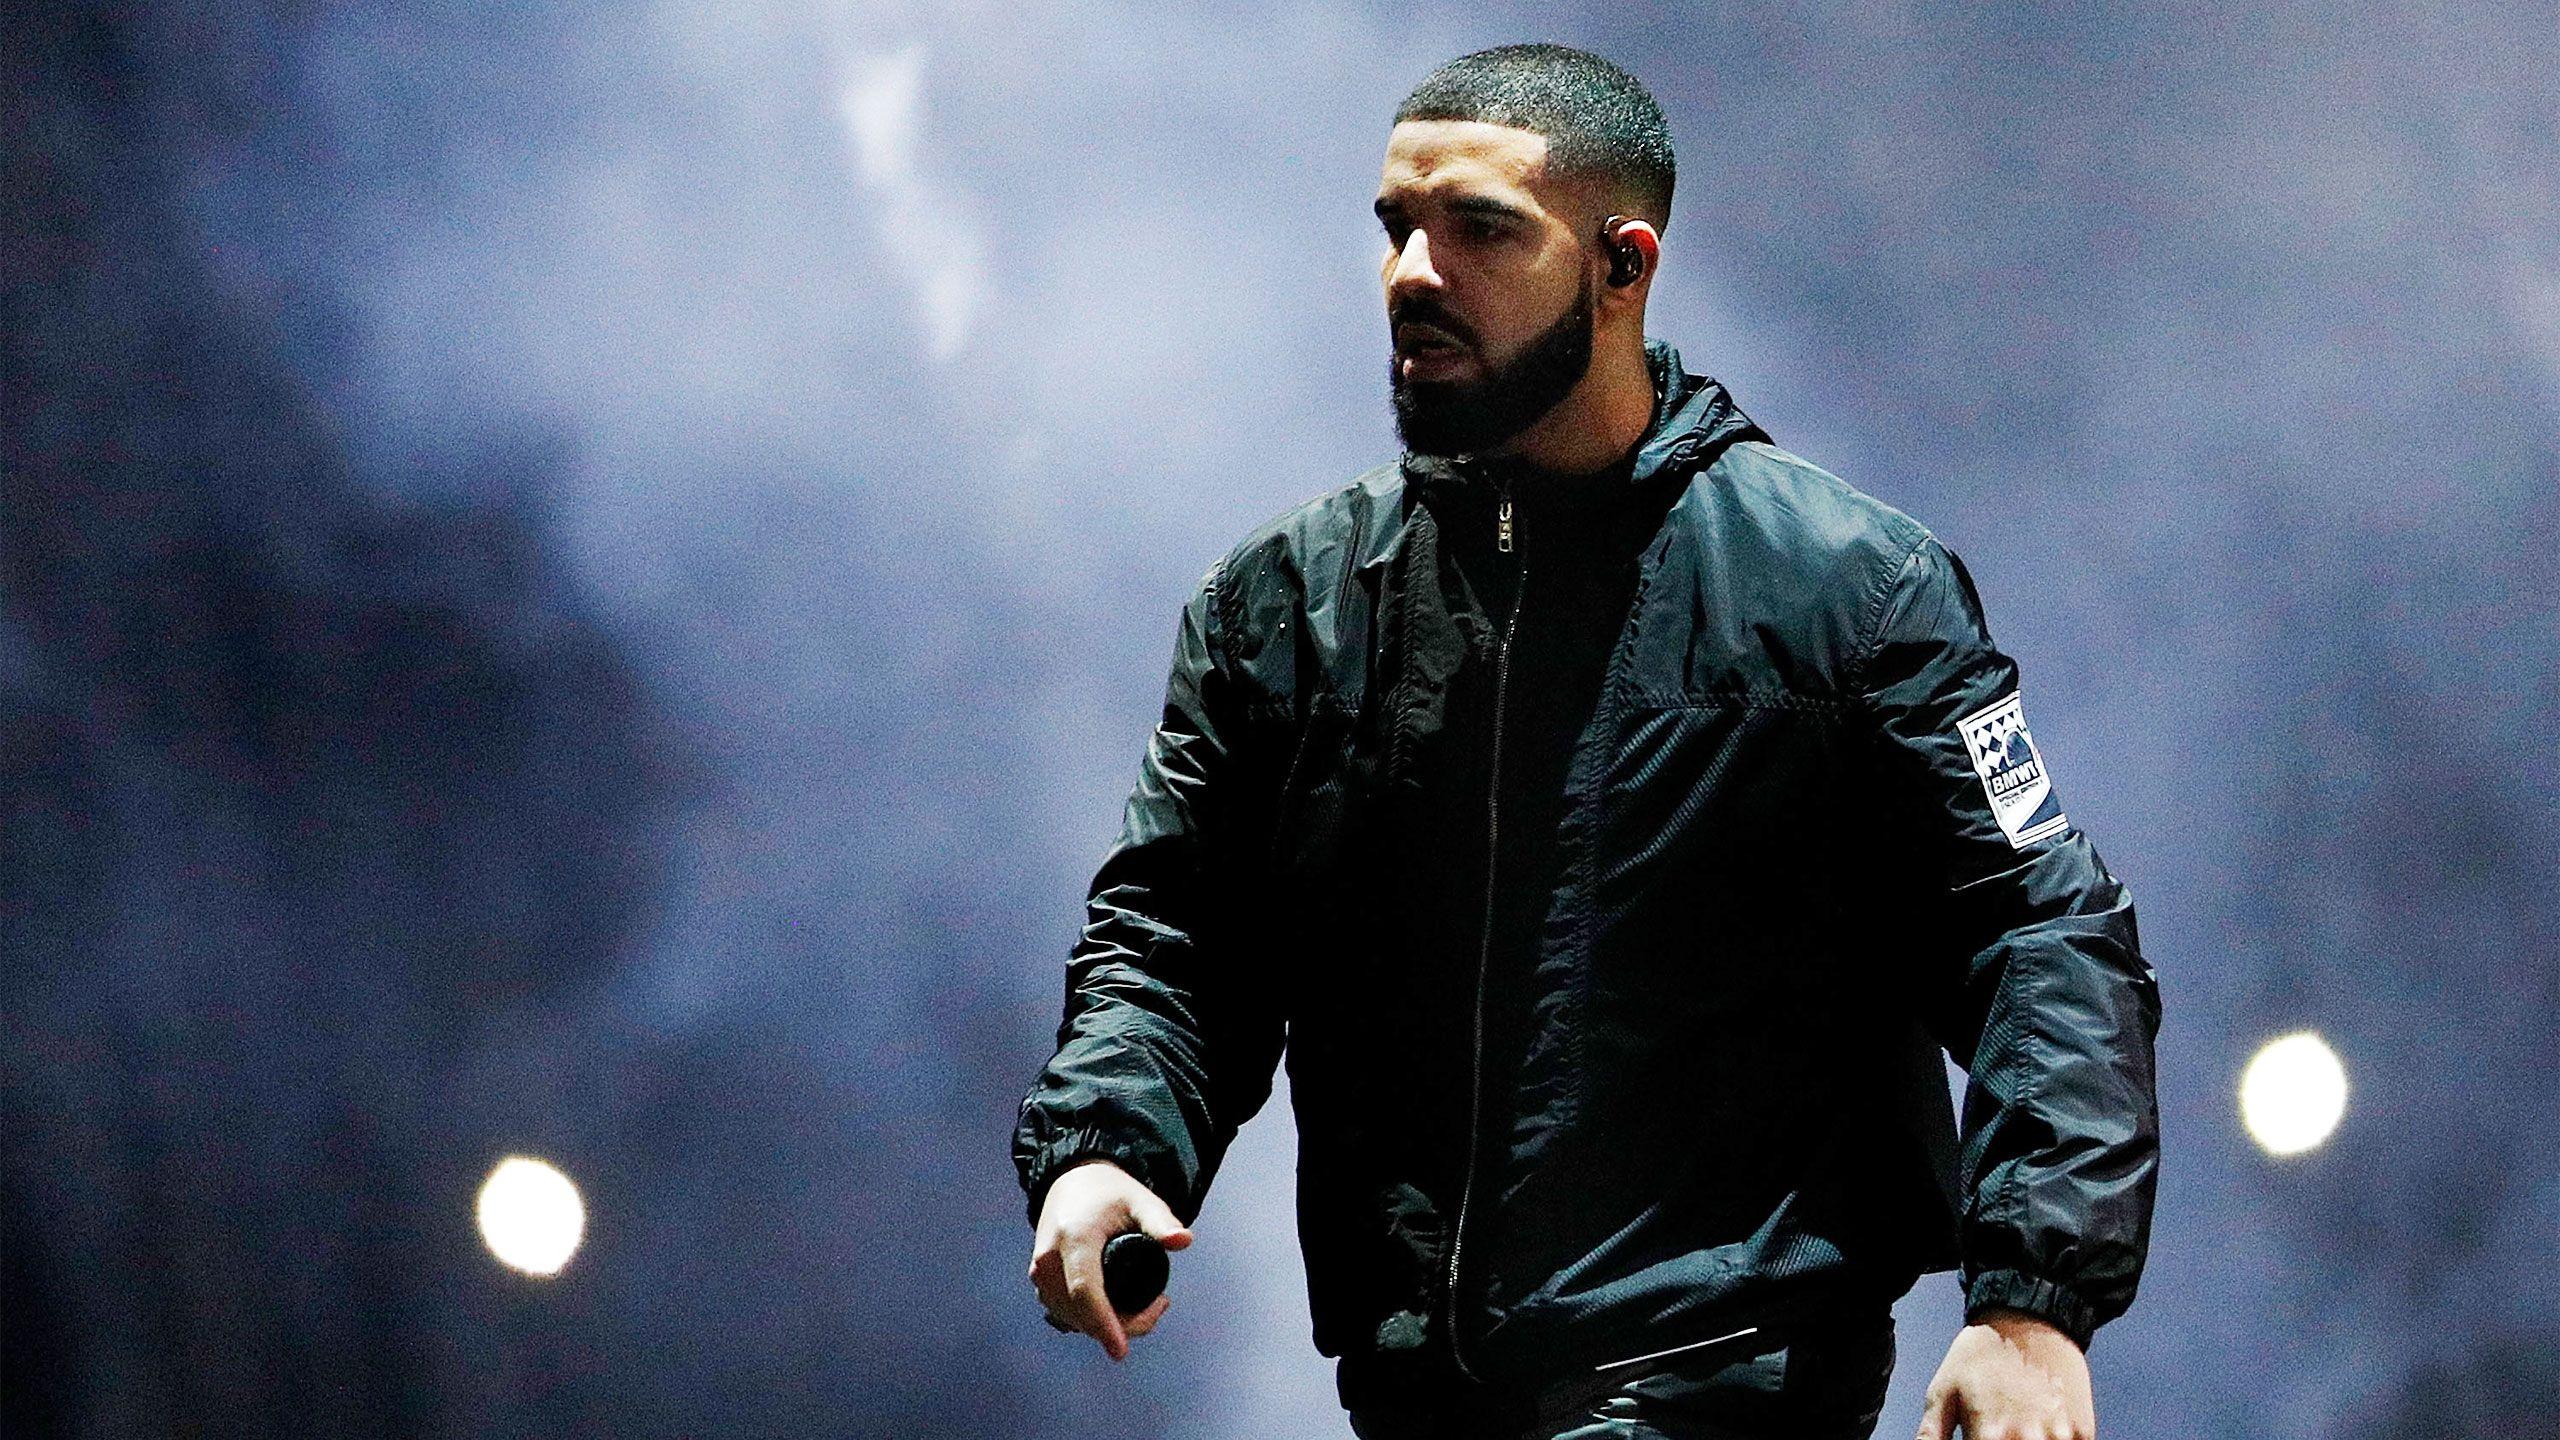 Drake Sort Of Confirms New Adidas Deal